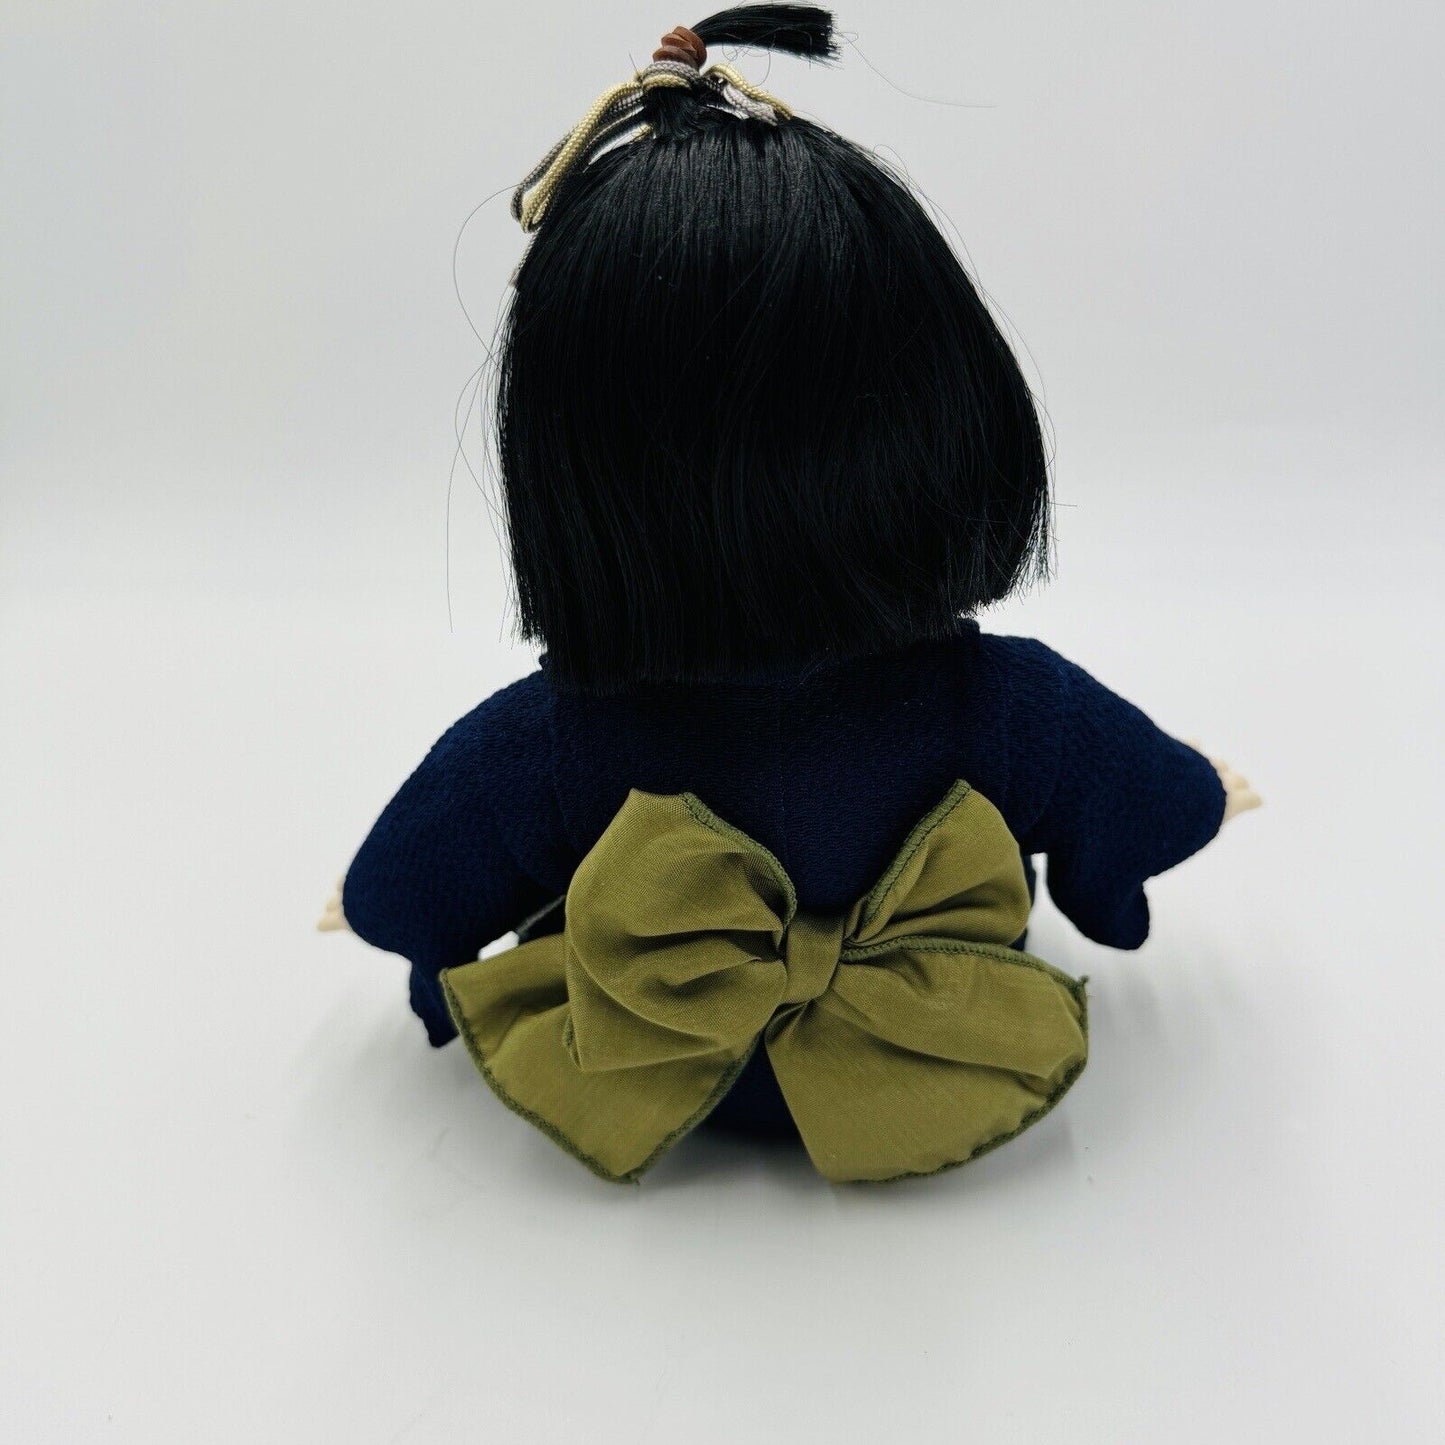 Ooike Oike Co. Ltd. Kyo Osana Navy Blue Japanese Vinyl Doll Traditional Toy